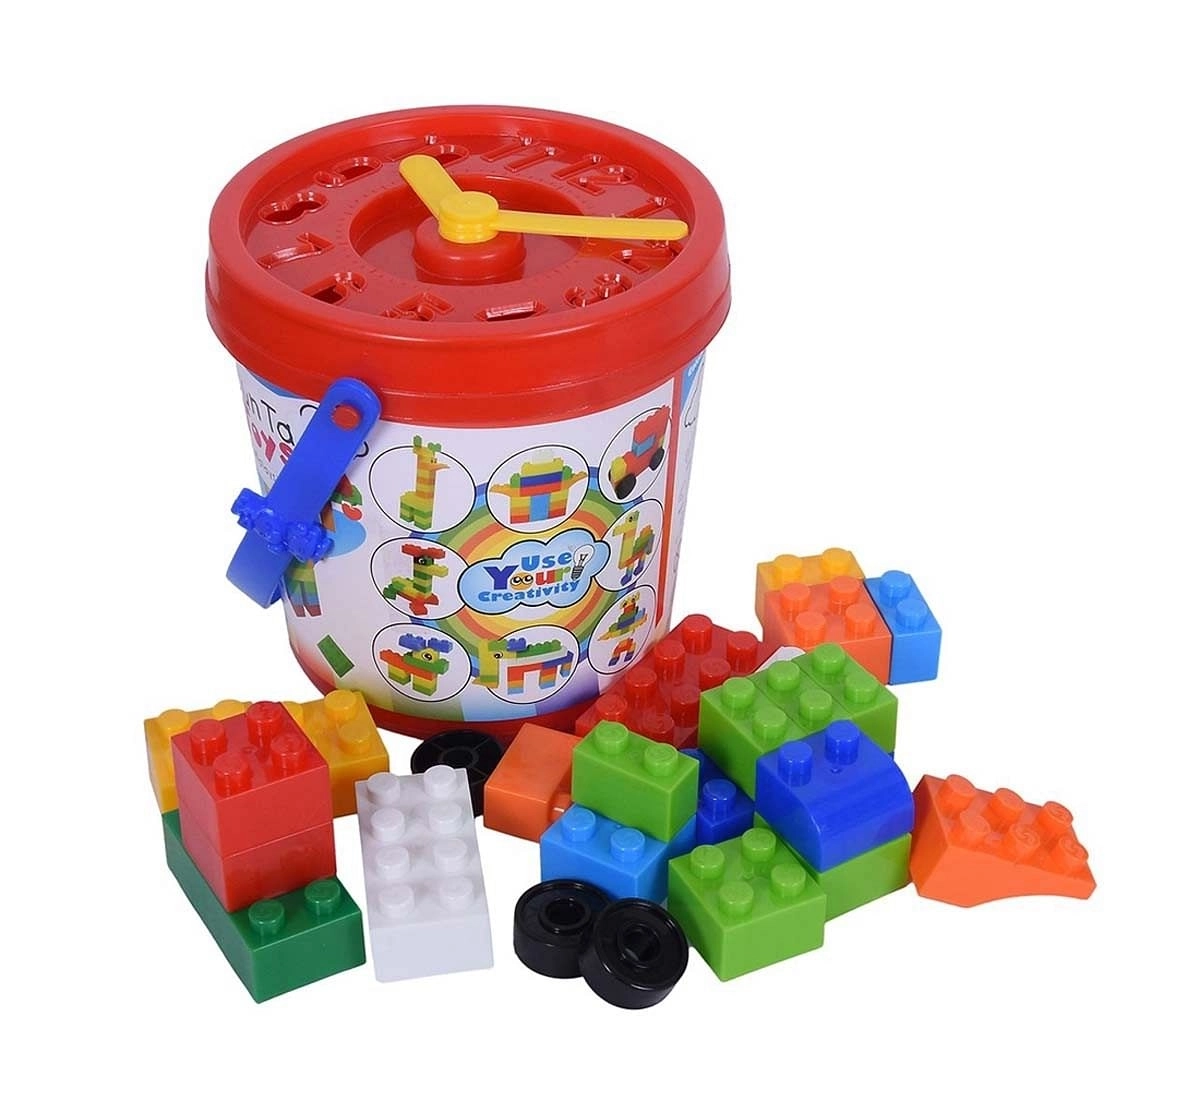 Sunta Basic Plastic Blocks Baby Gear for Kids Age 3Y+